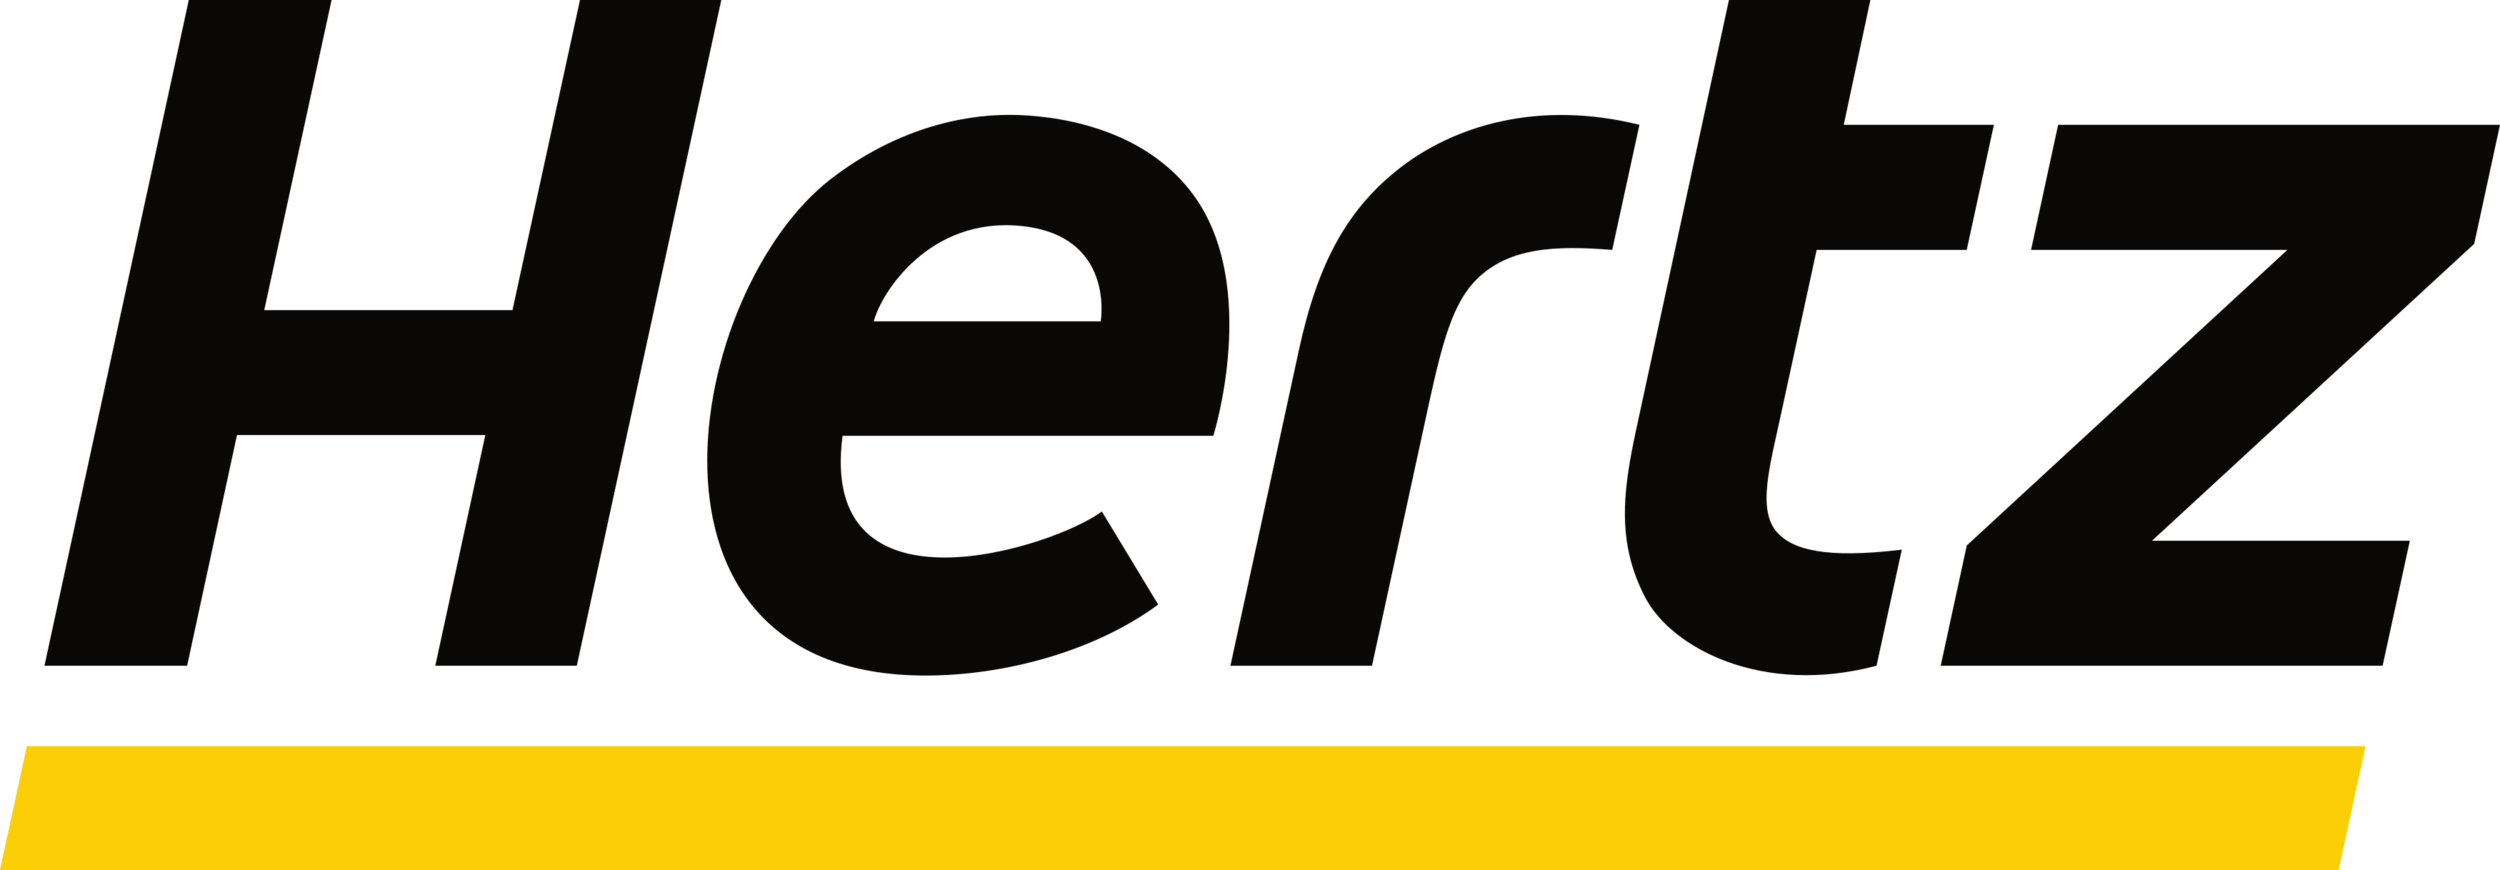 hertz-logo.png